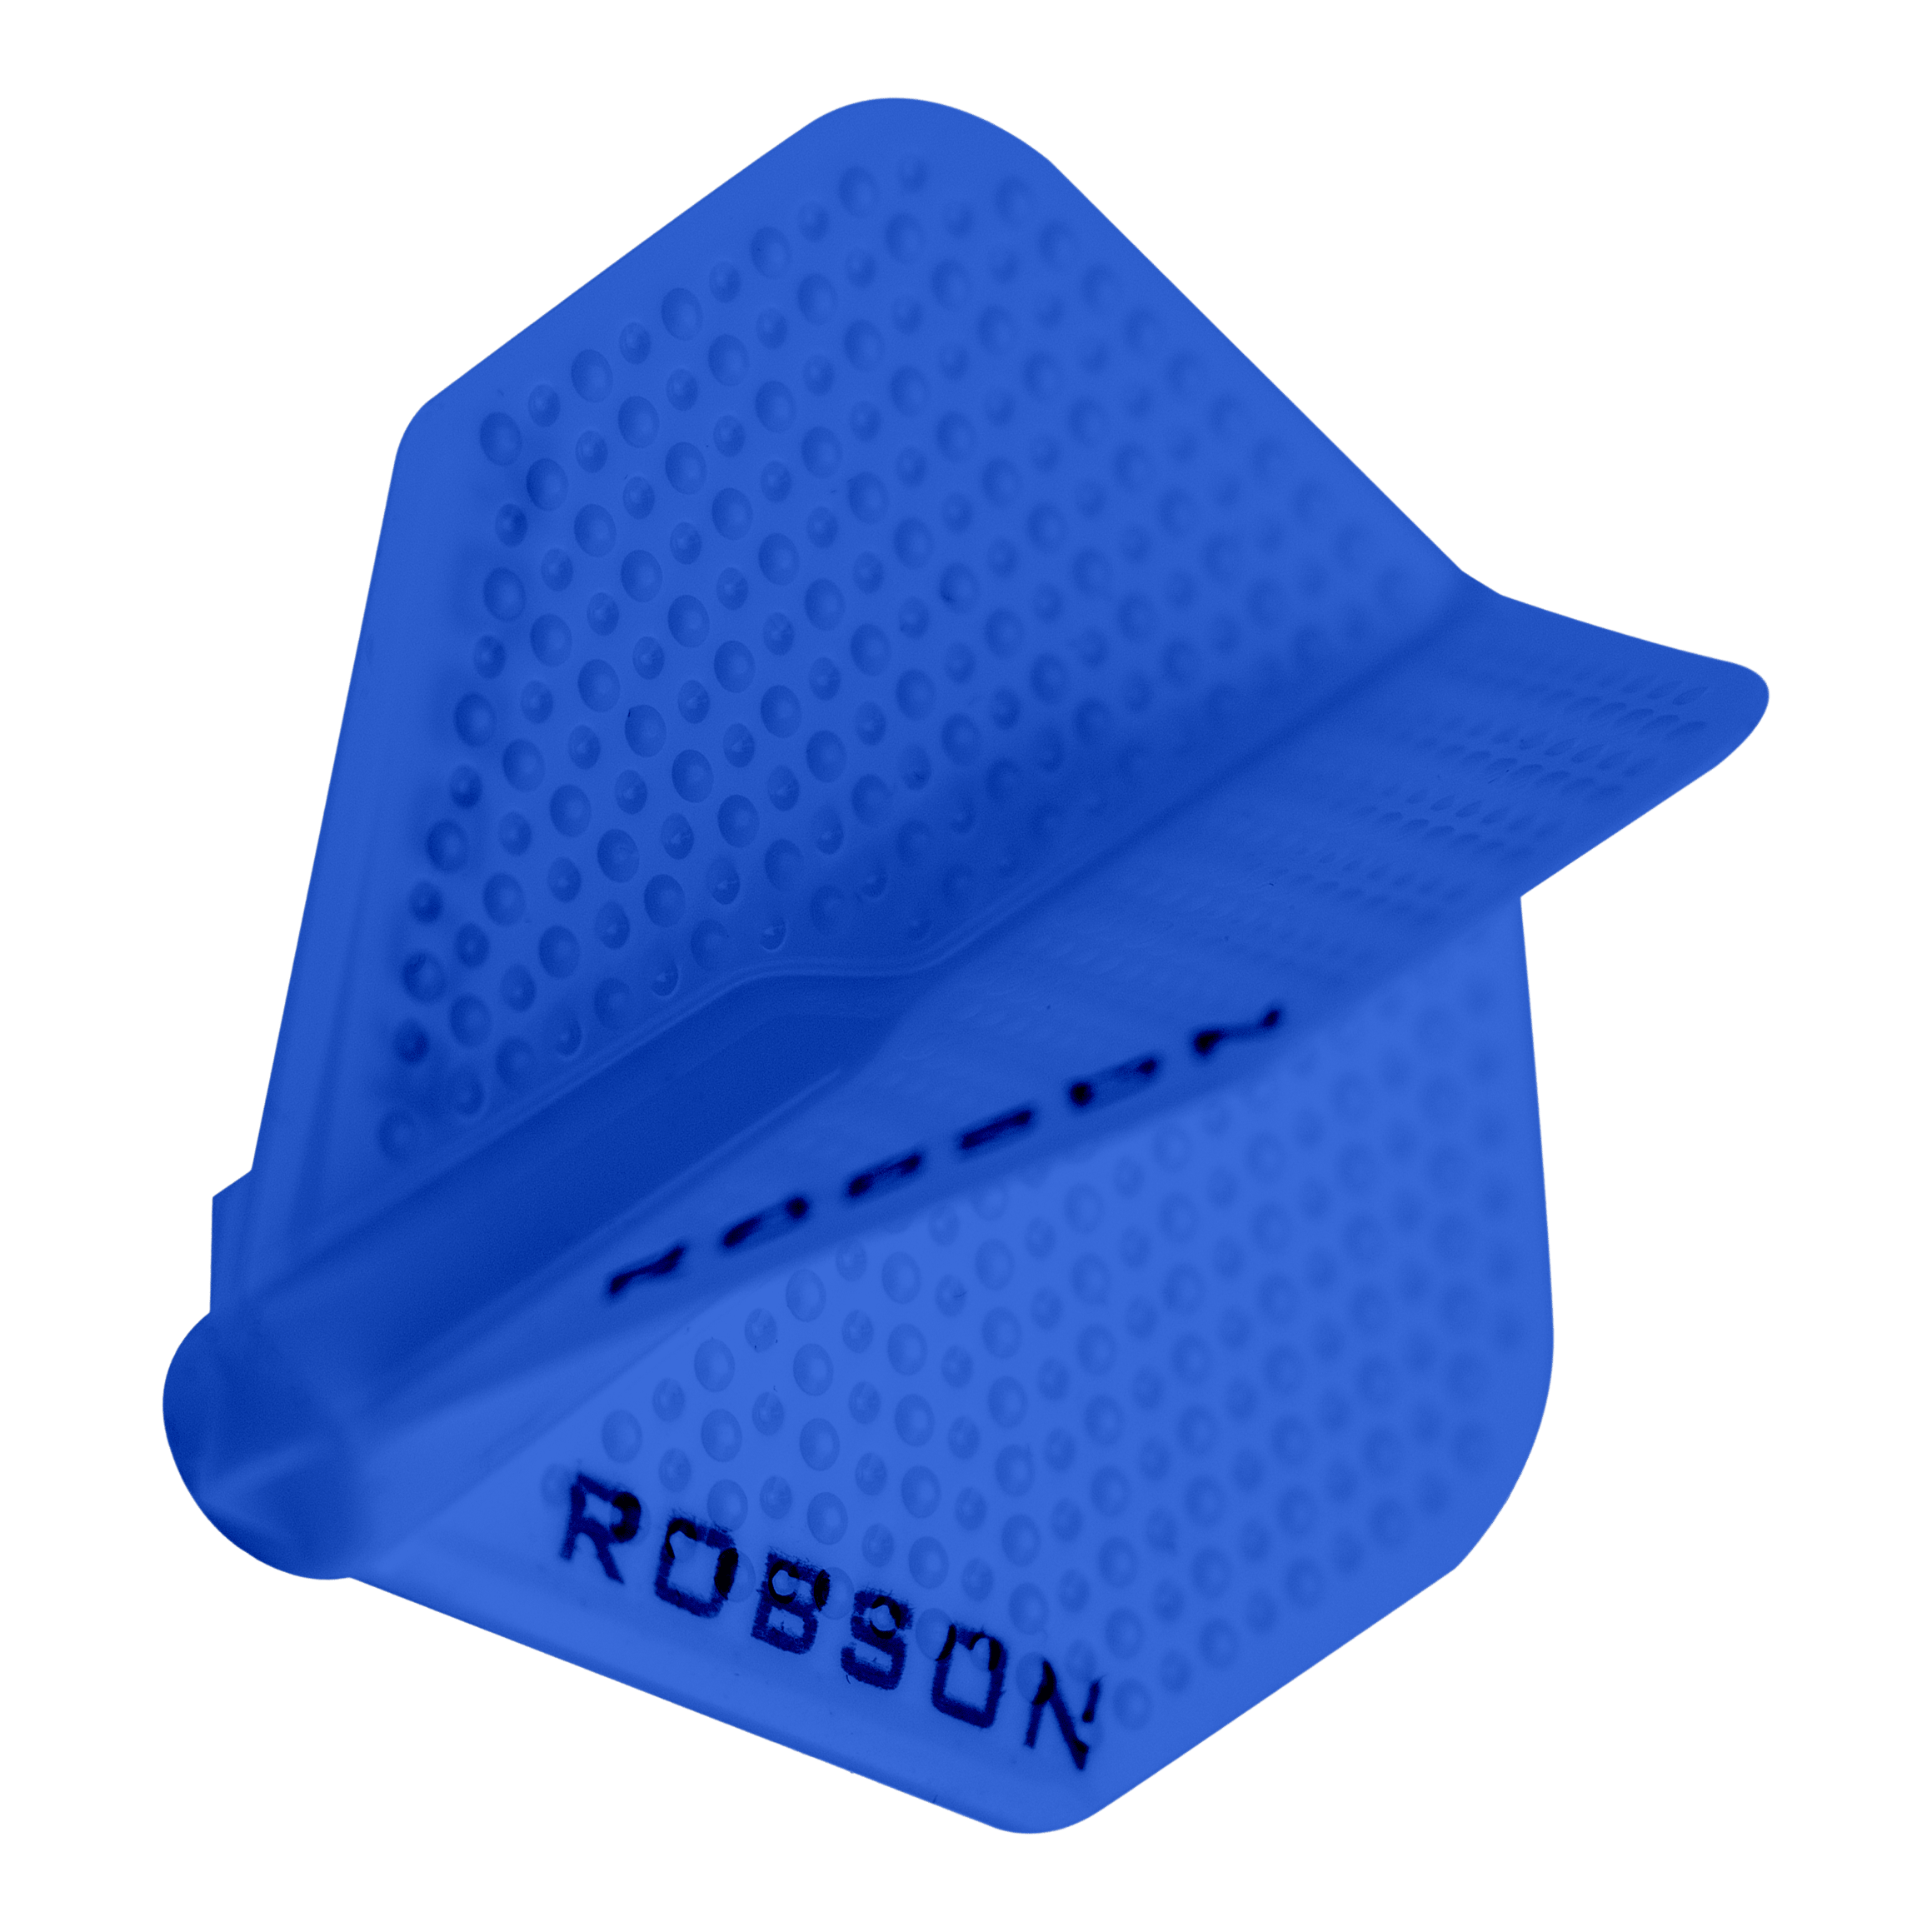 Robson Plus Dimple Flights - Bleu